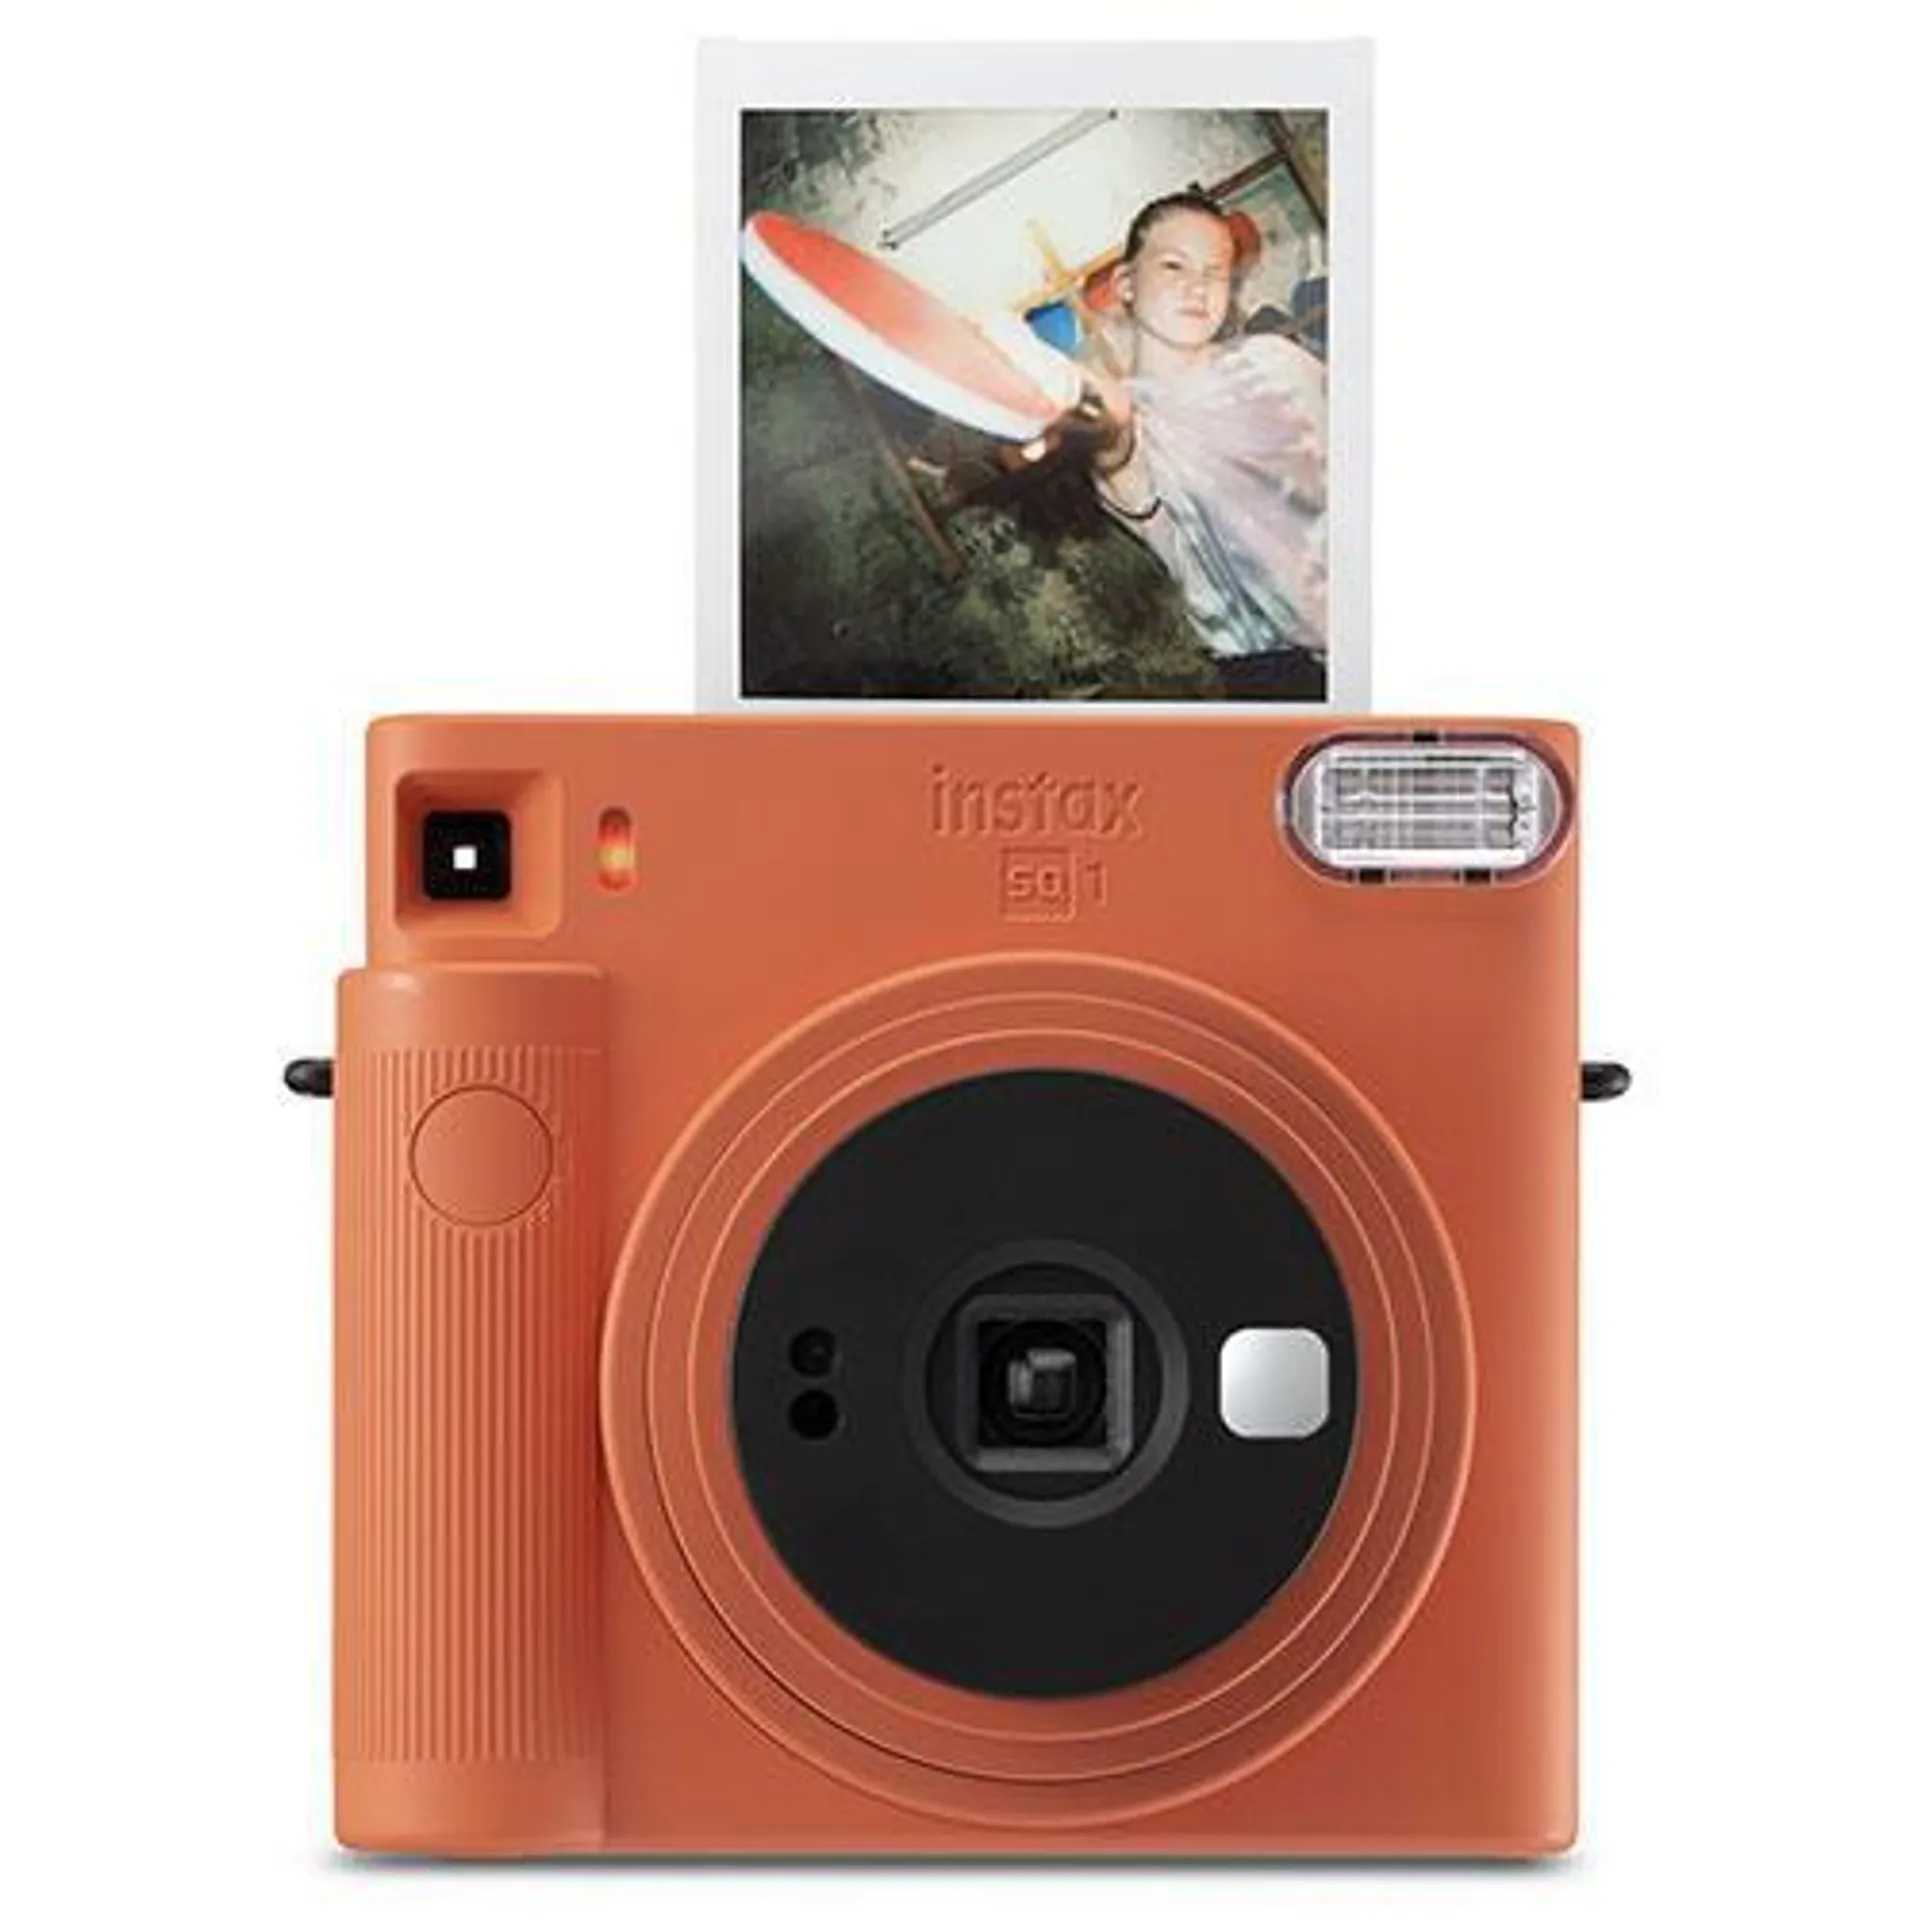 instax Square SQ1 Instant Camera in Terracotta Orange